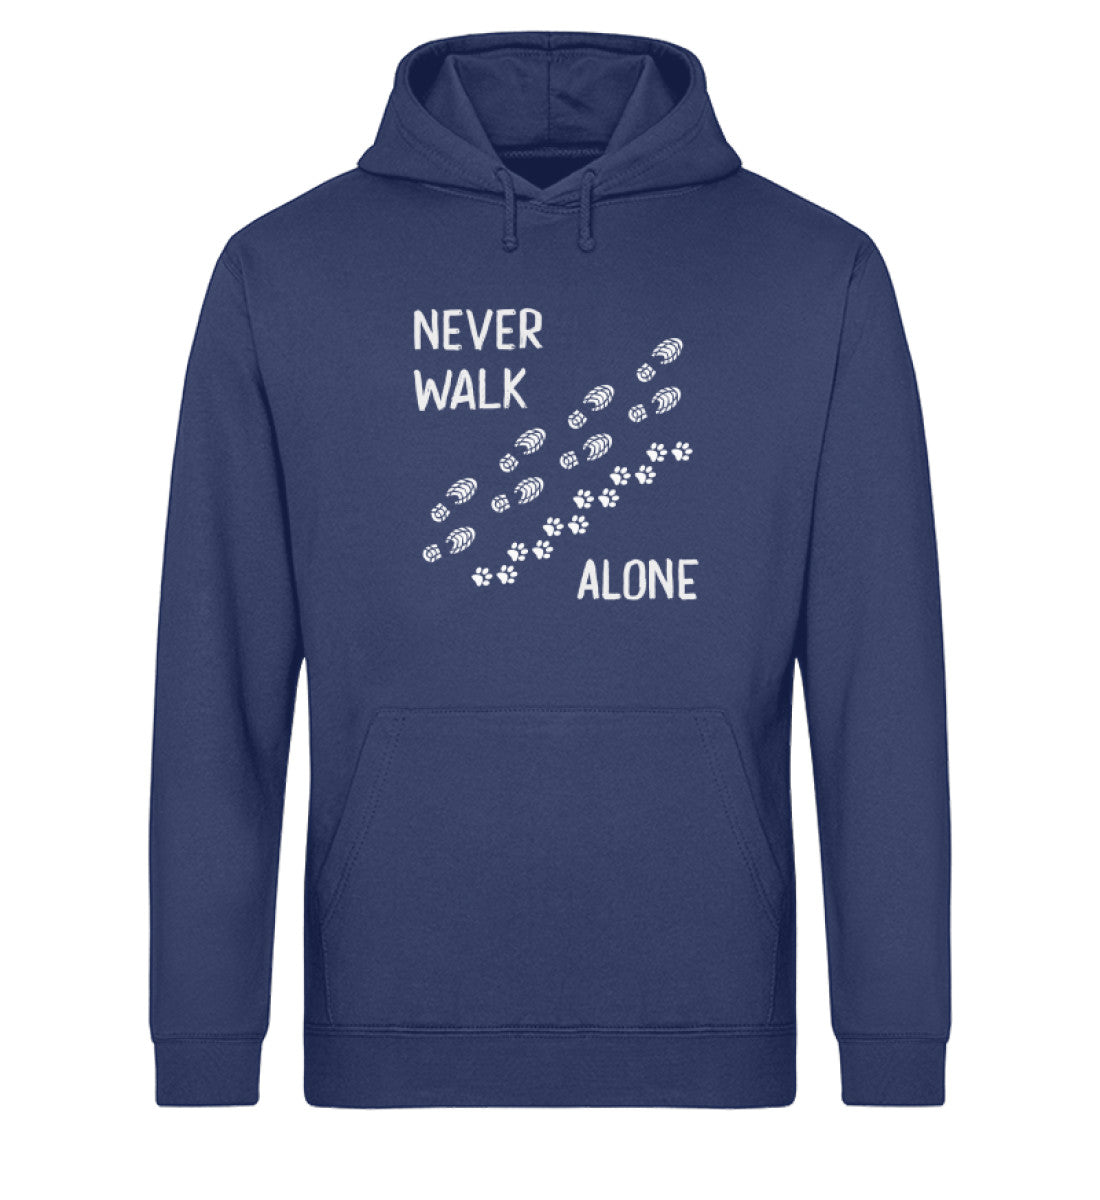 Never walk alone - Unisex Organic Hoodie wandern Navyblau